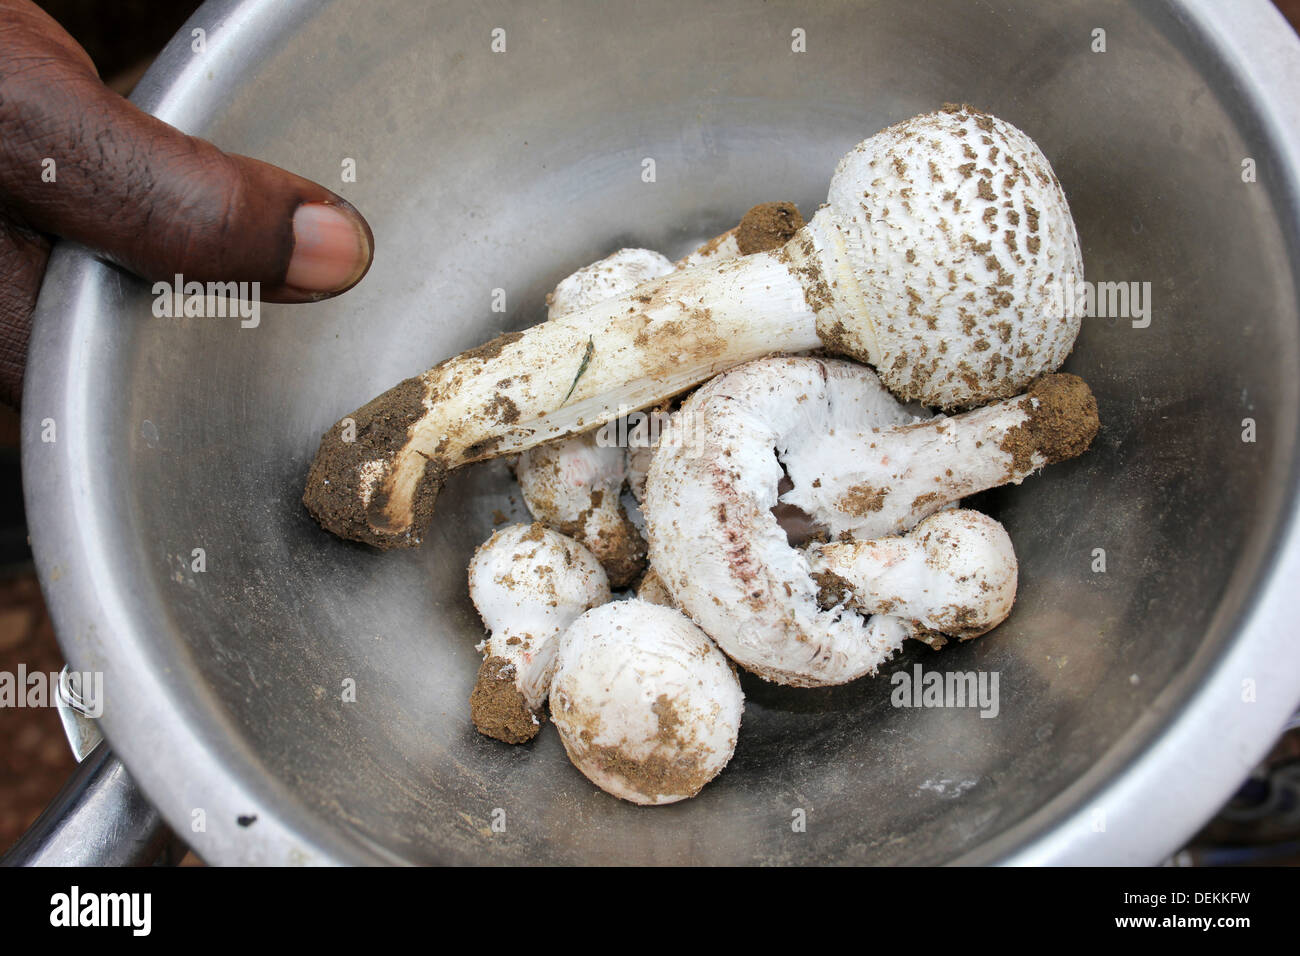 Ghana Locally Picked Edible Mushrooms Stock Photo